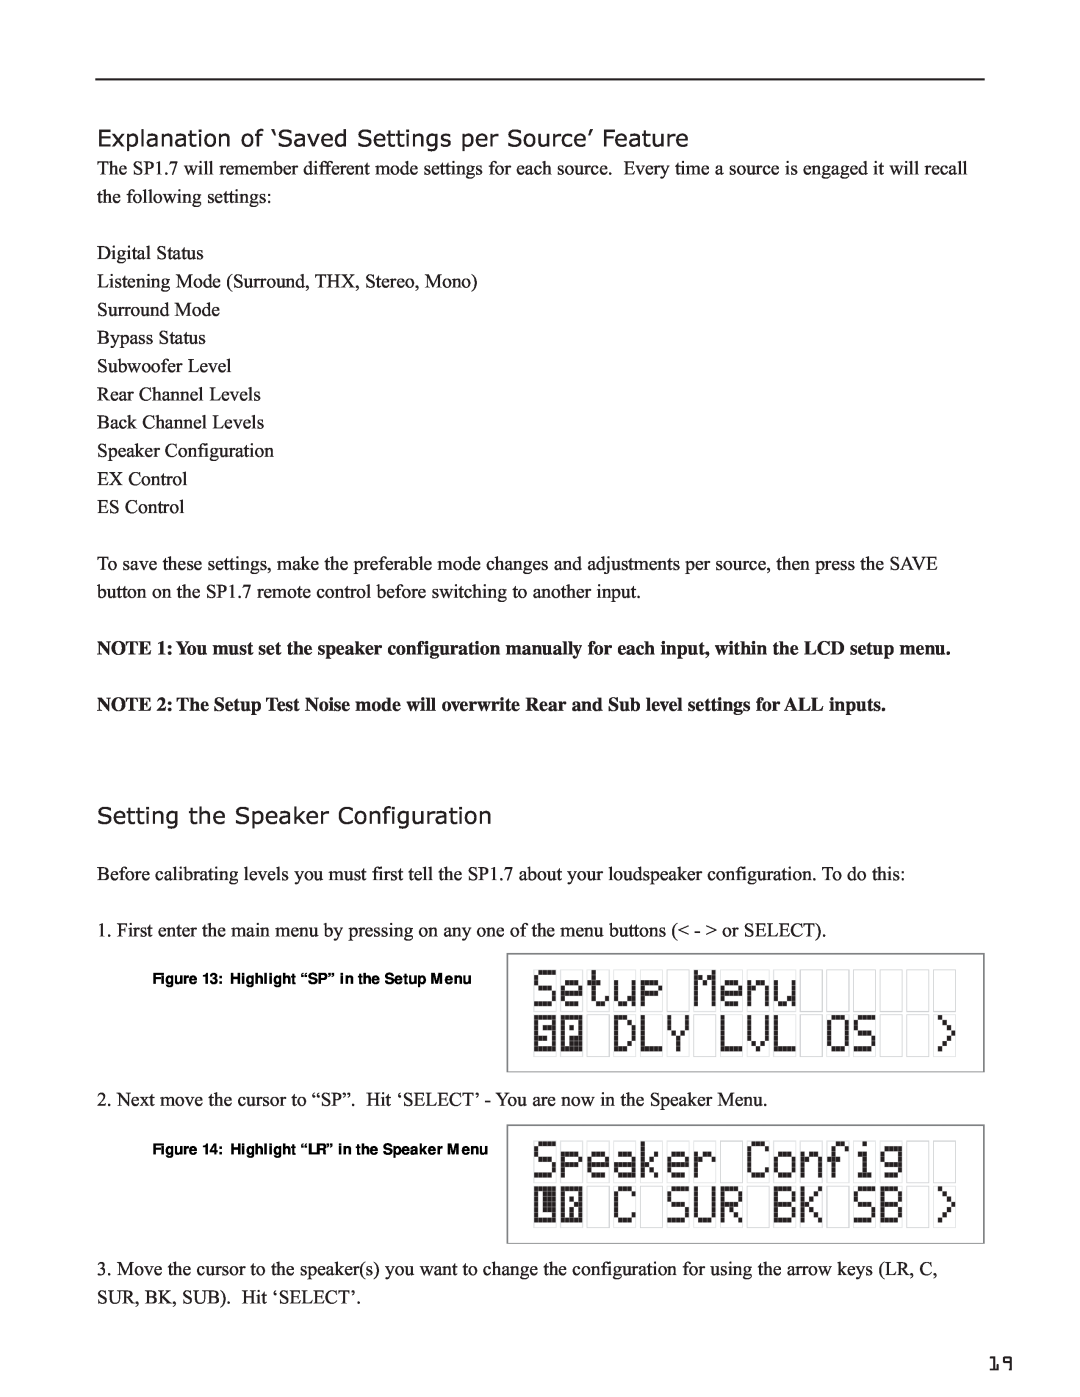 Bryston SP1.7PRECISION manual Setting the Speaker Configuration 